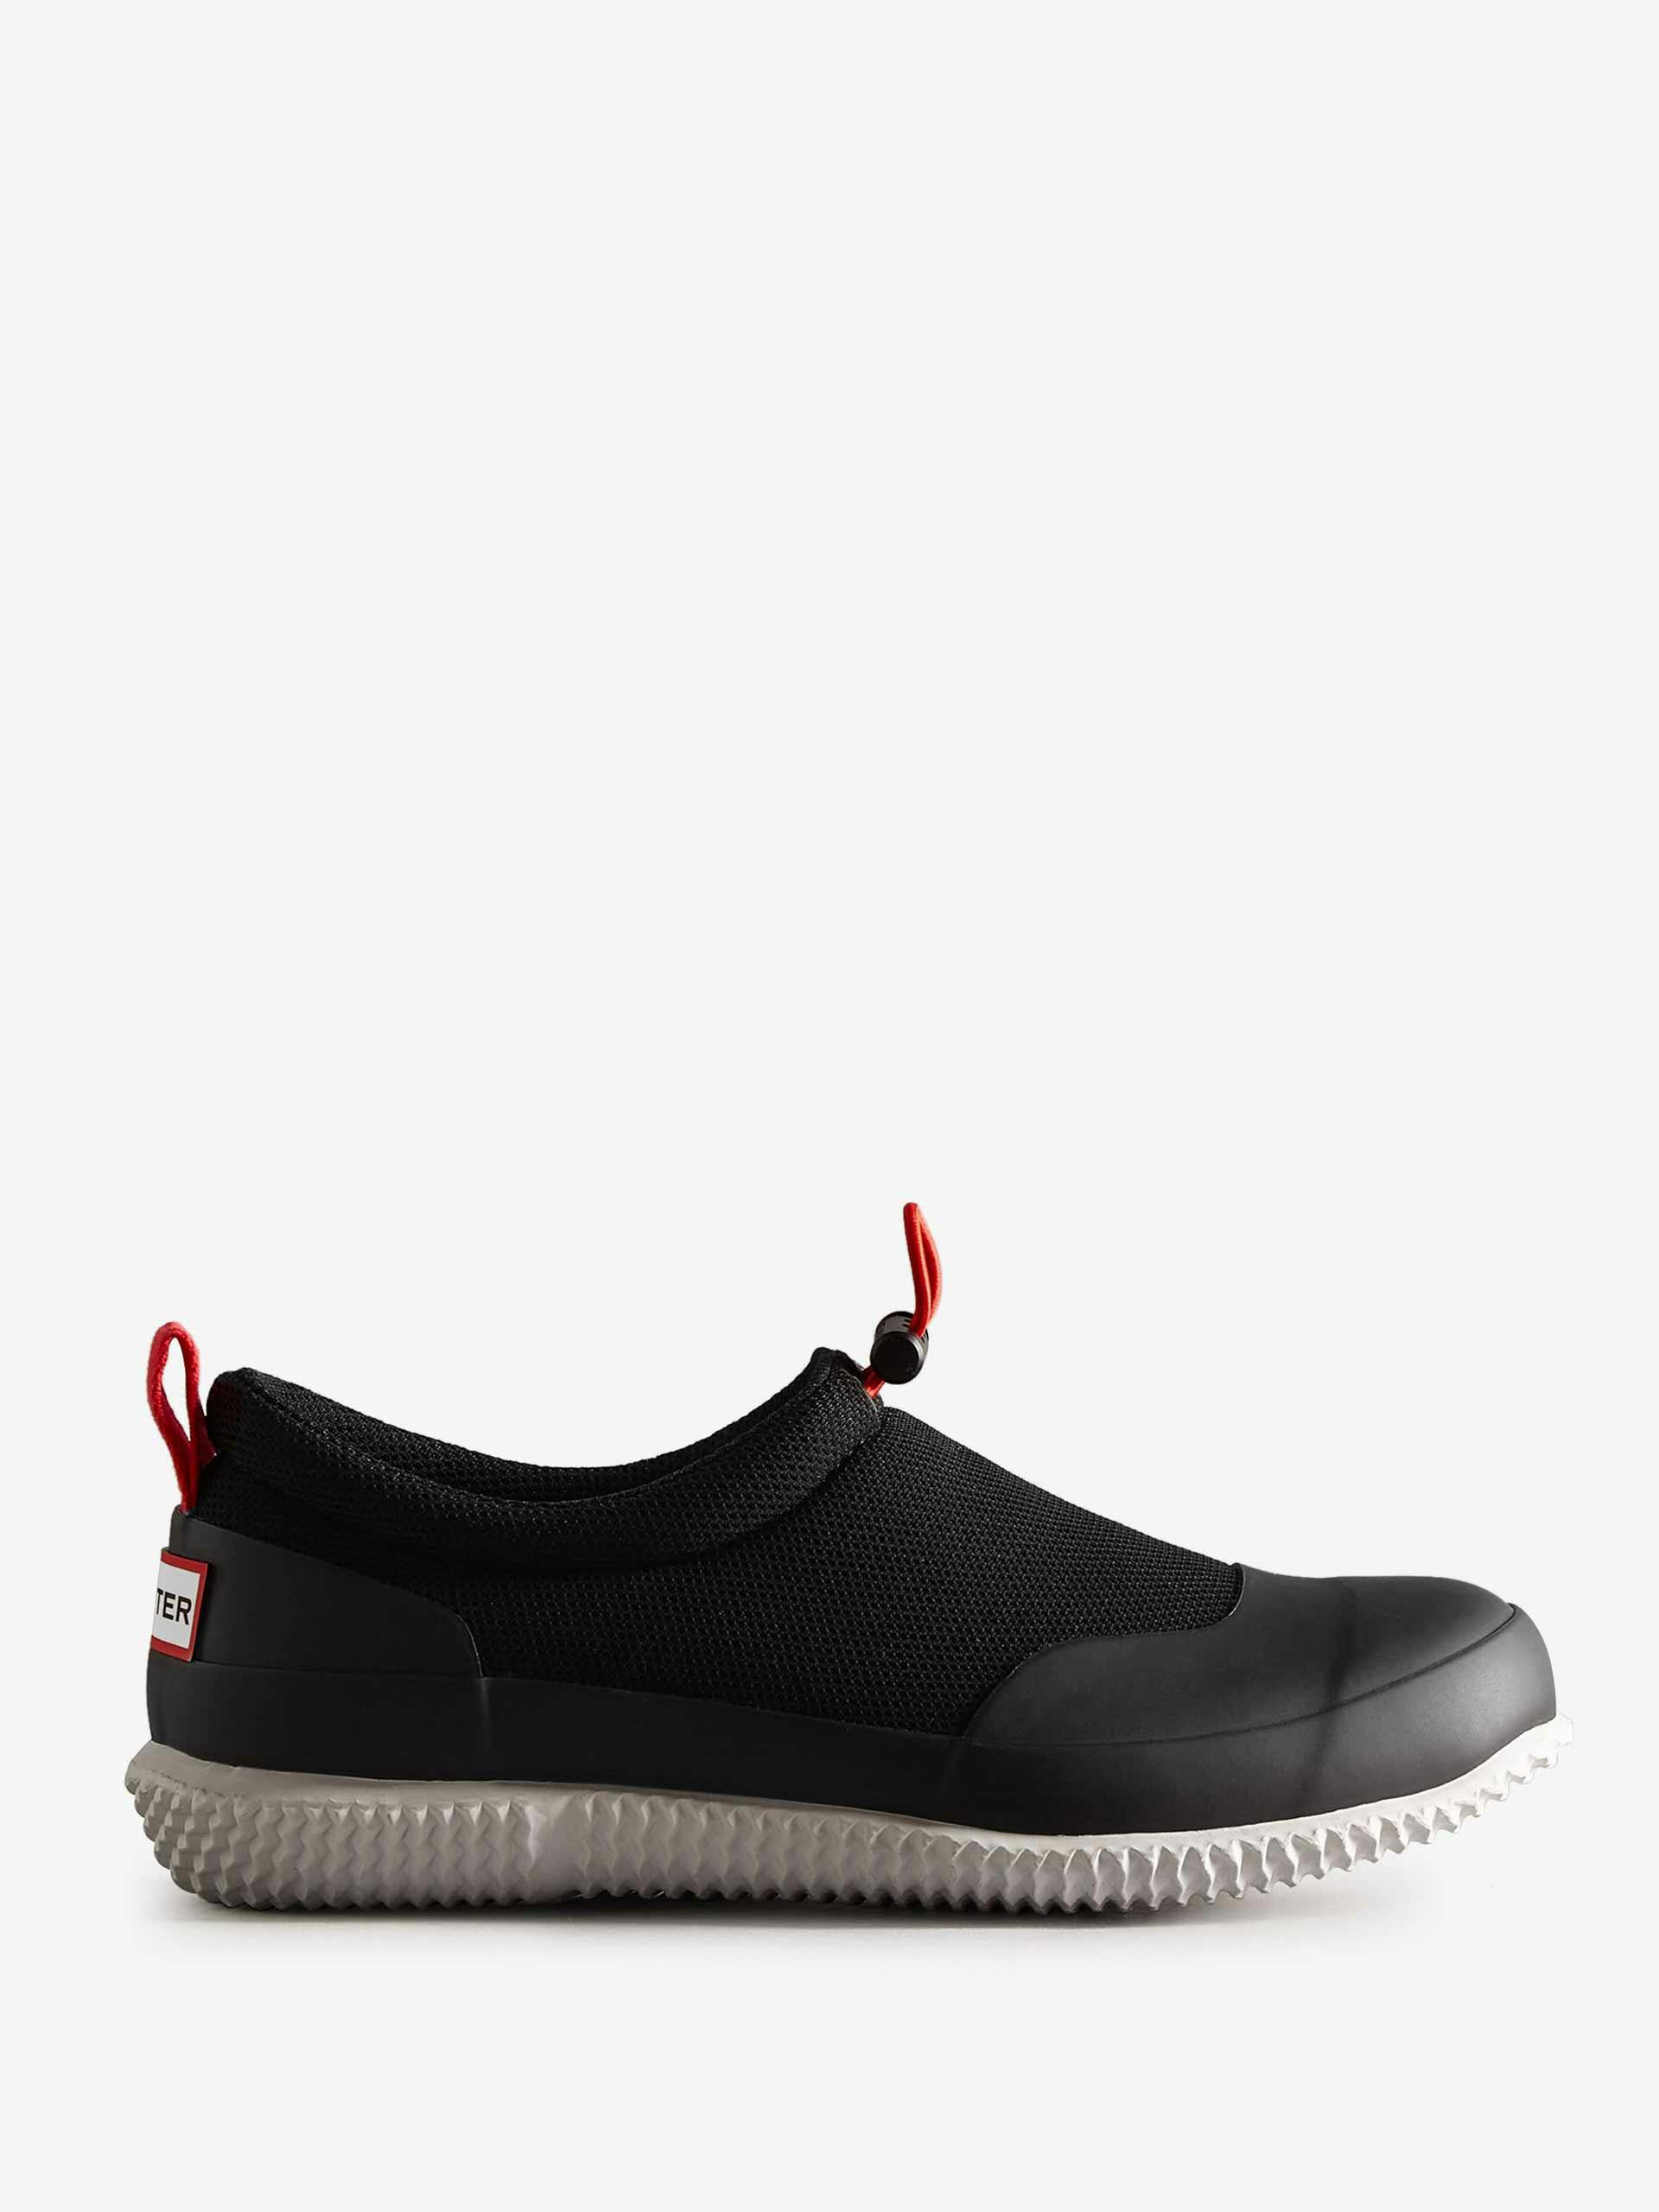 Black mesh shoe